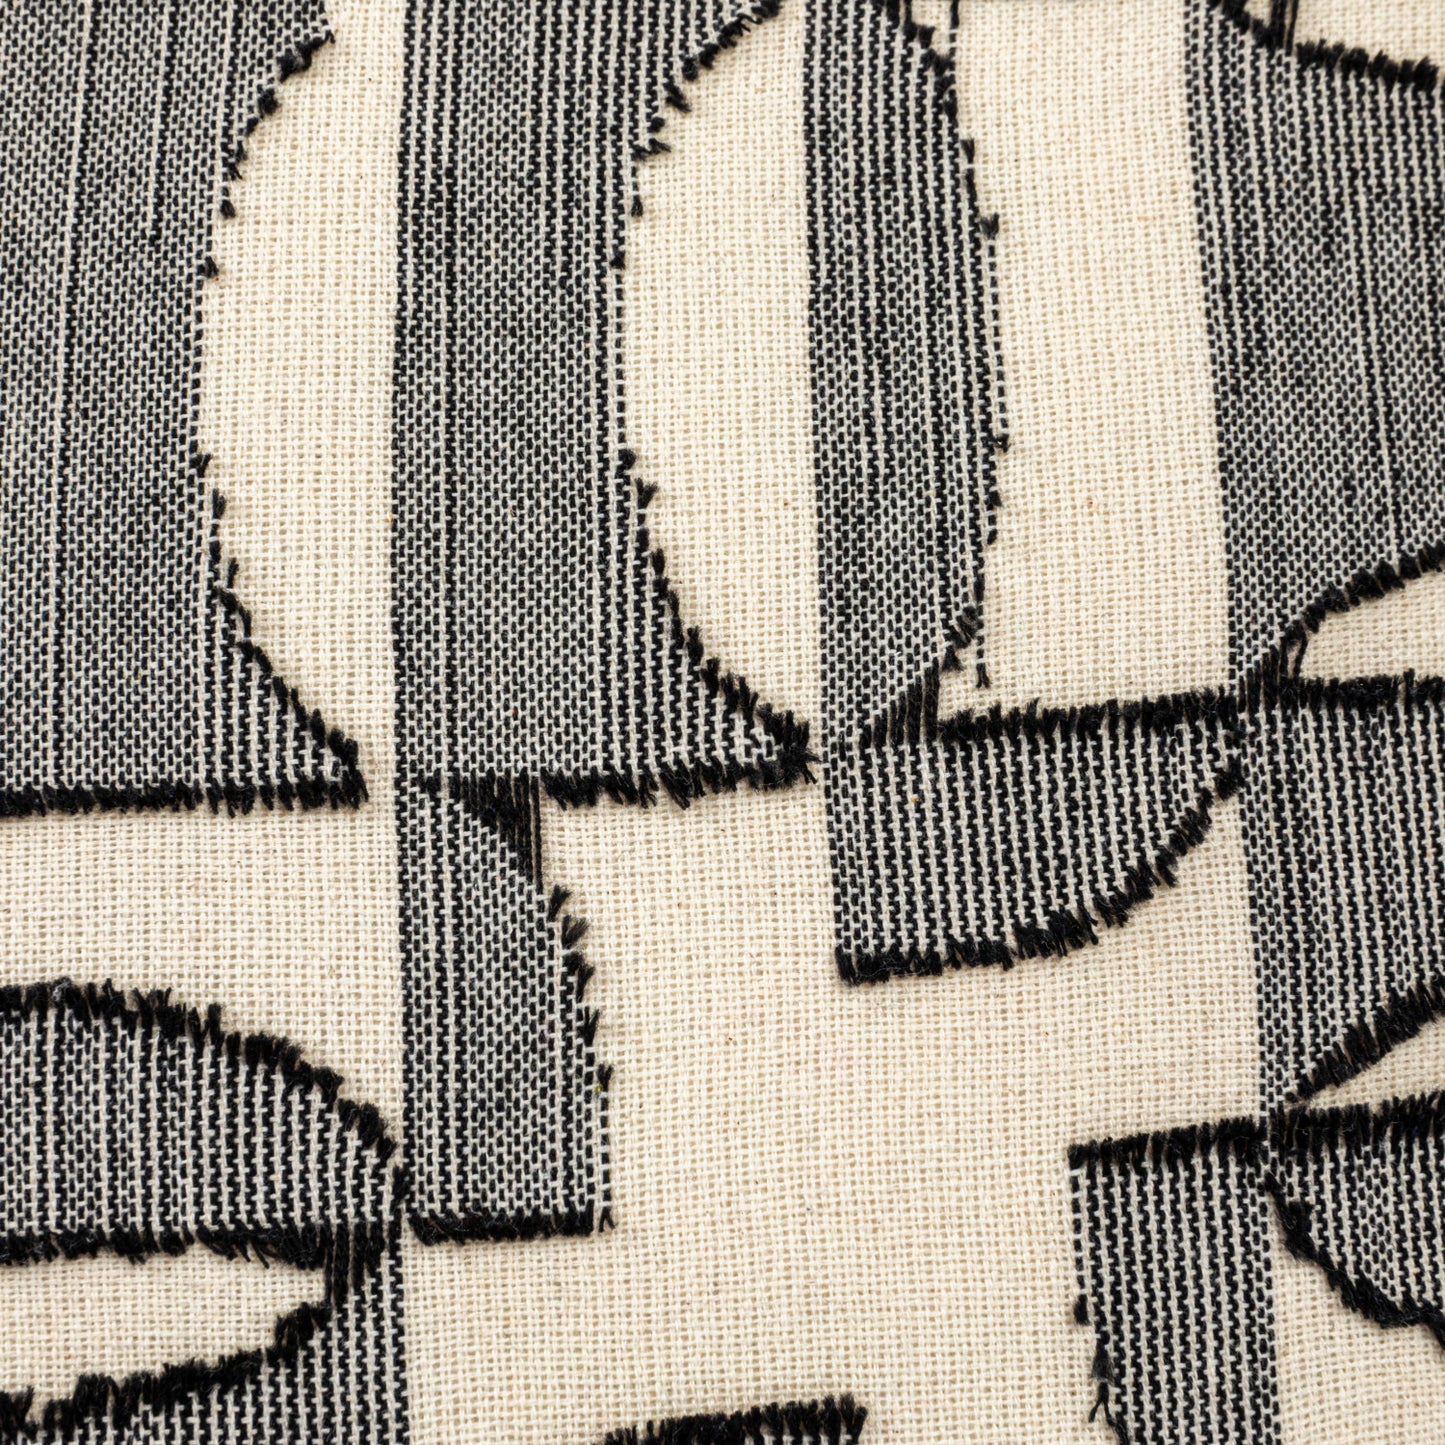 Square Woven Cotton Pillow w/ Geometric Pattern, Chambray Back & Fringe